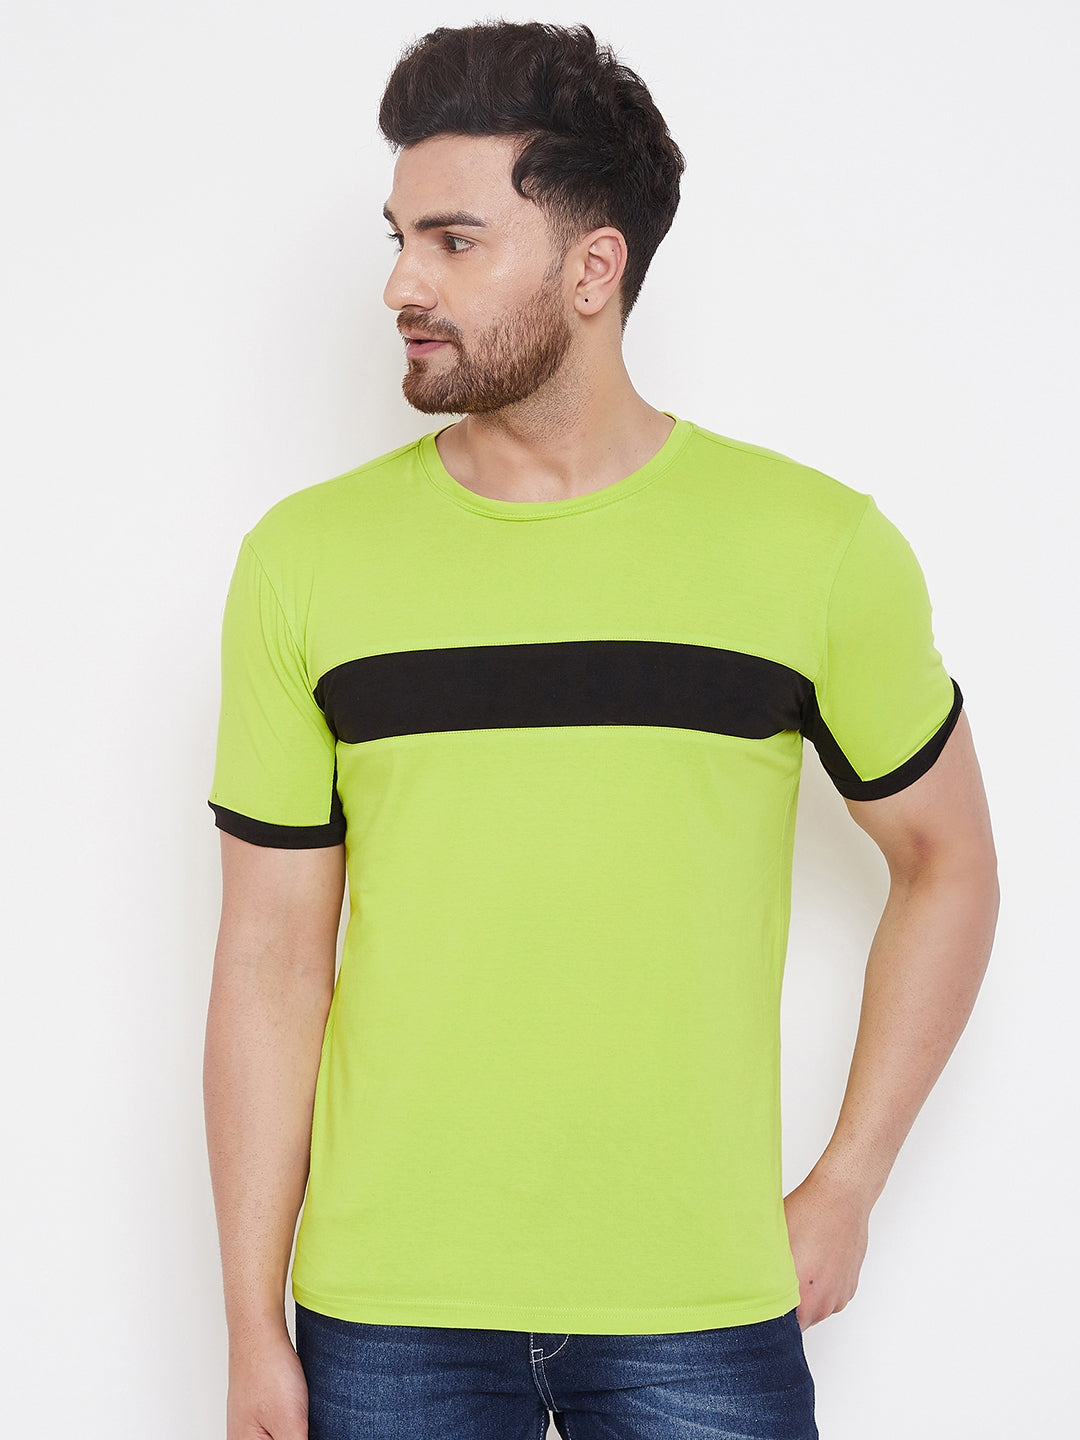 Neon Green/Black Color Block Men's Full Sleeve Round Neck T-Shirt